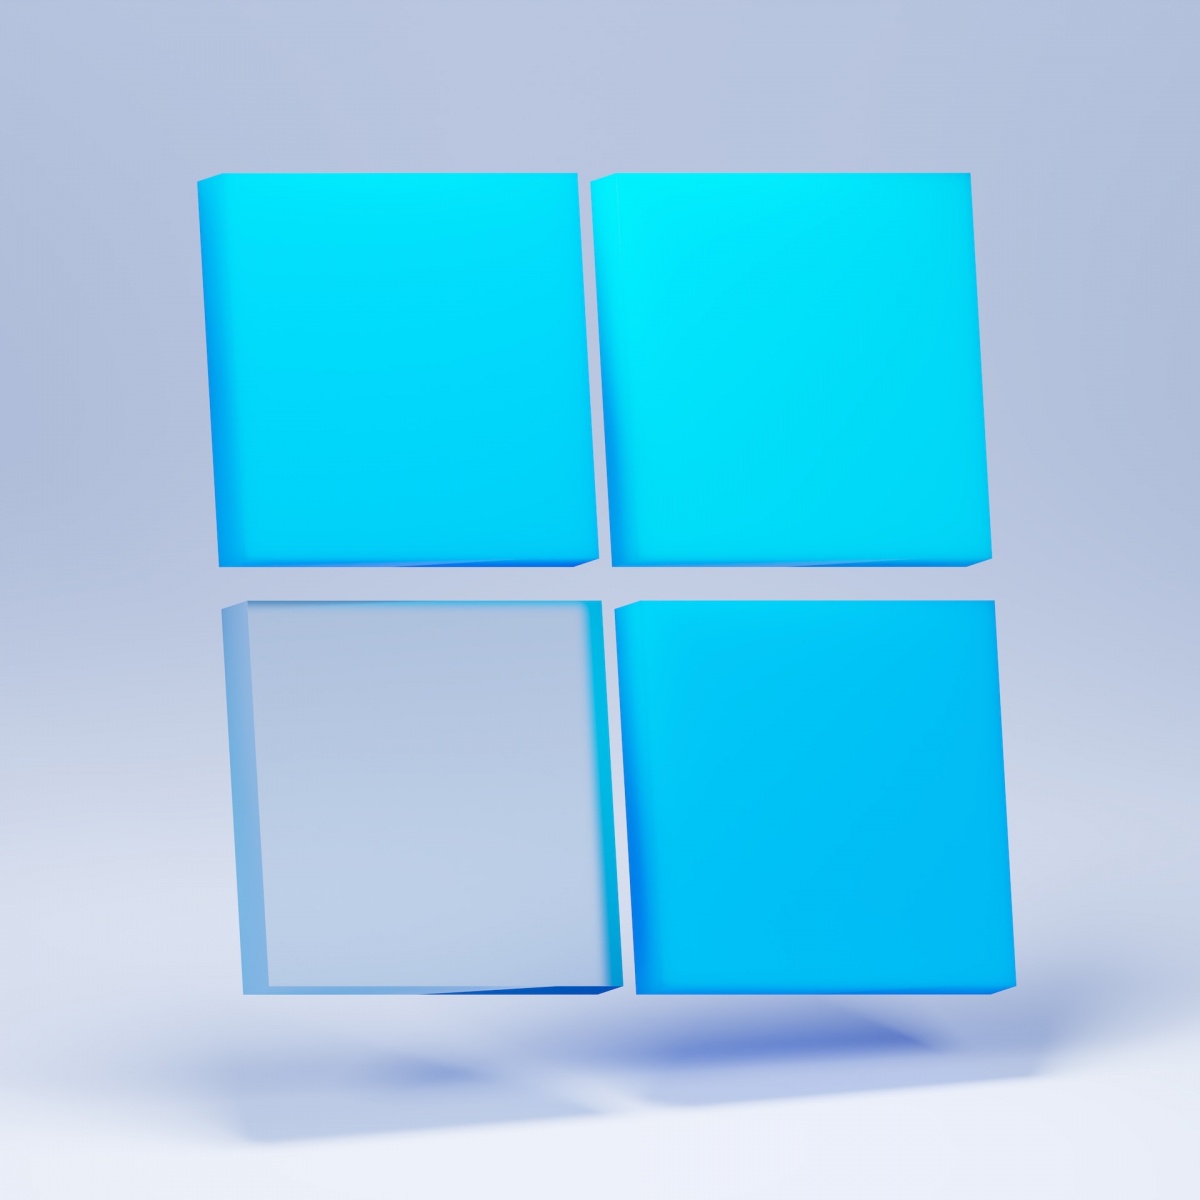 Microsoft Windows 12 Interface Revealed: Flagship OS Sneak Peek Revealed